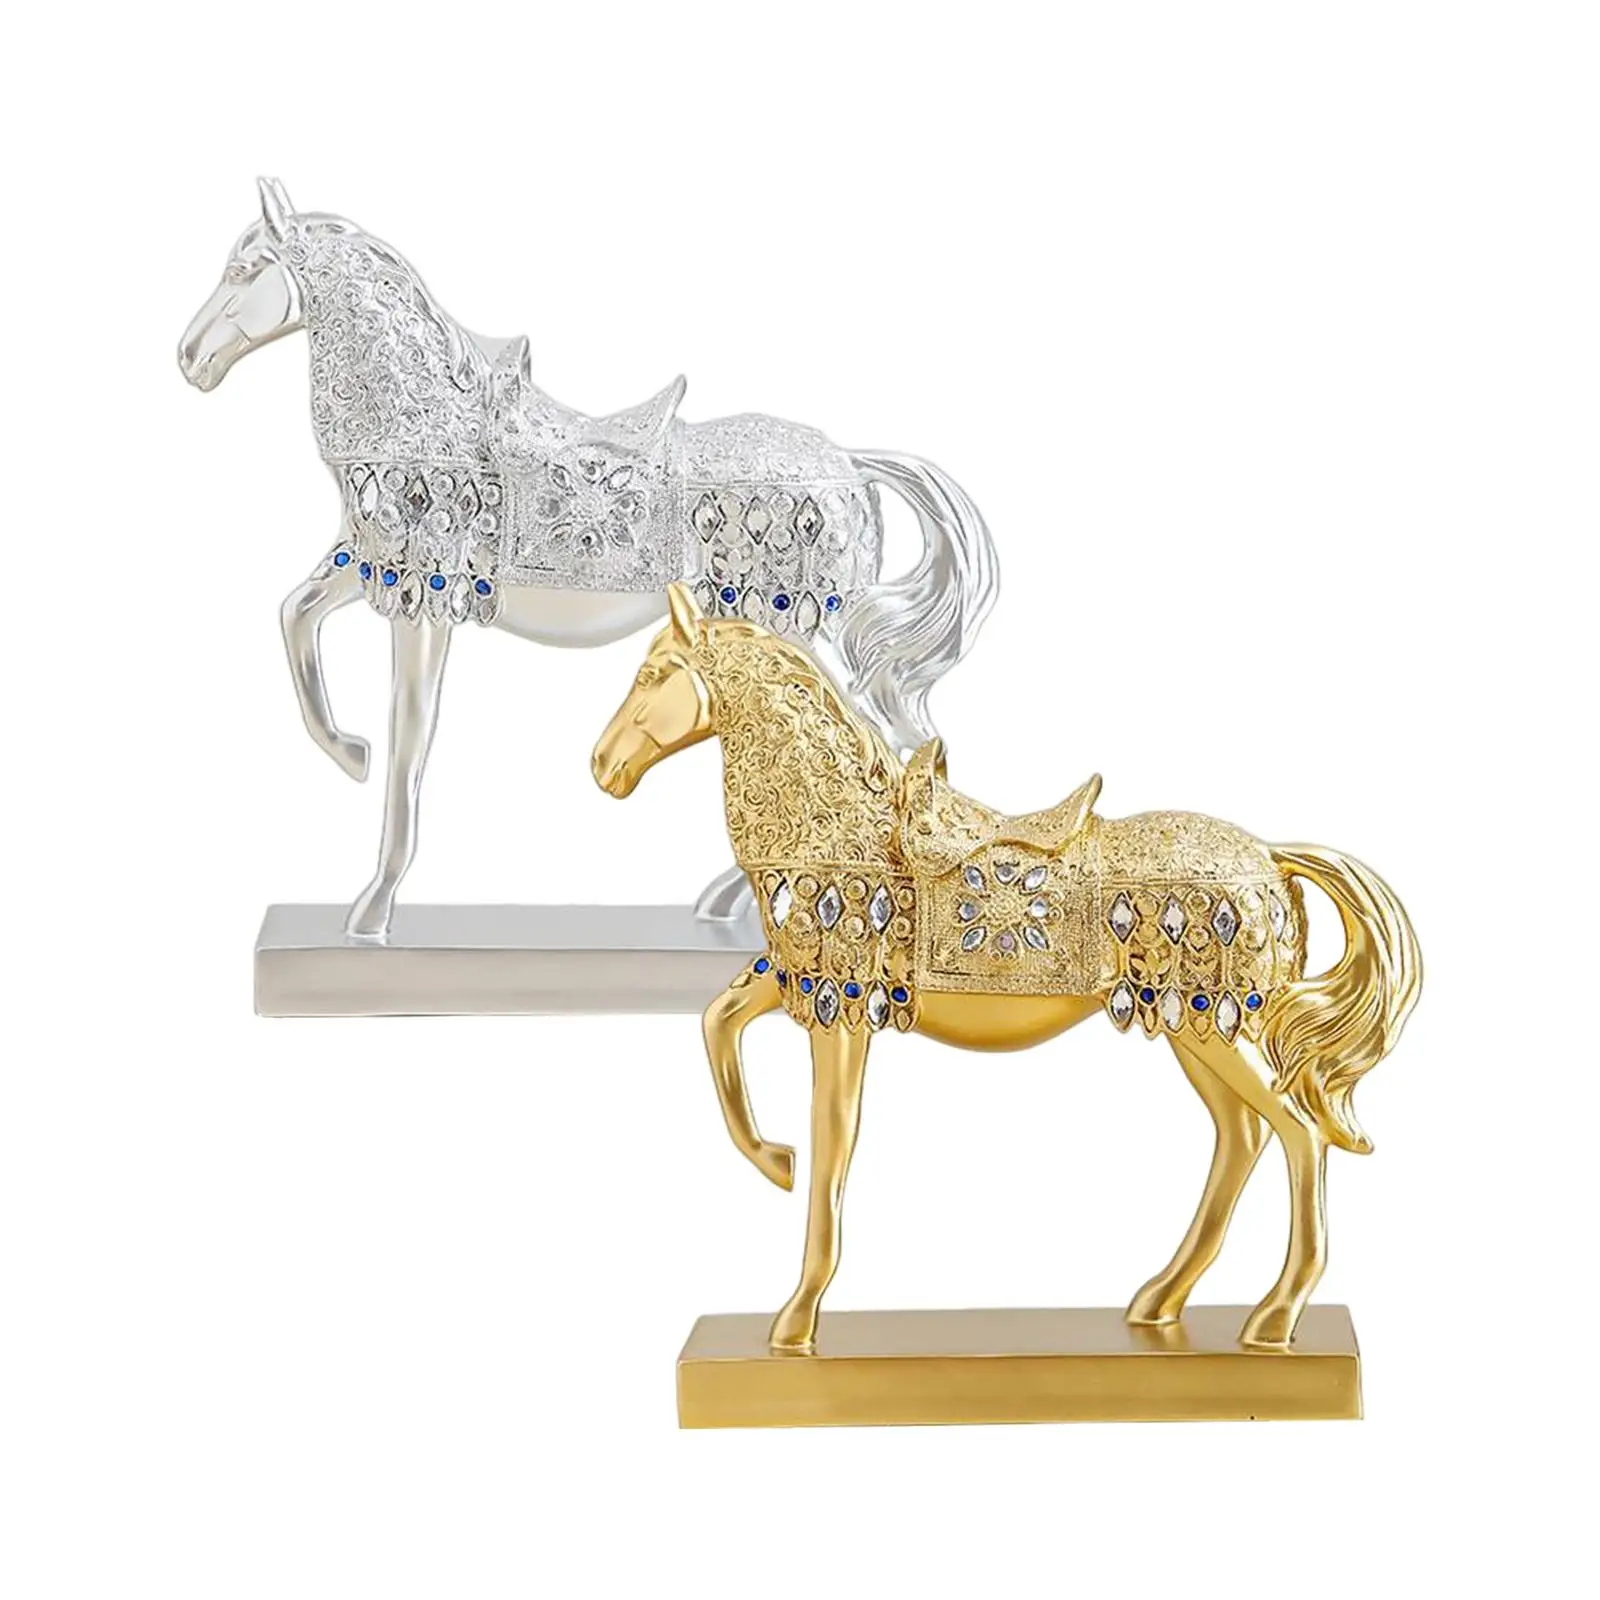 Modern Horse Statue Figurine Crafts Animal Sculpture for Home Shelf Wedding Bedroom Decor